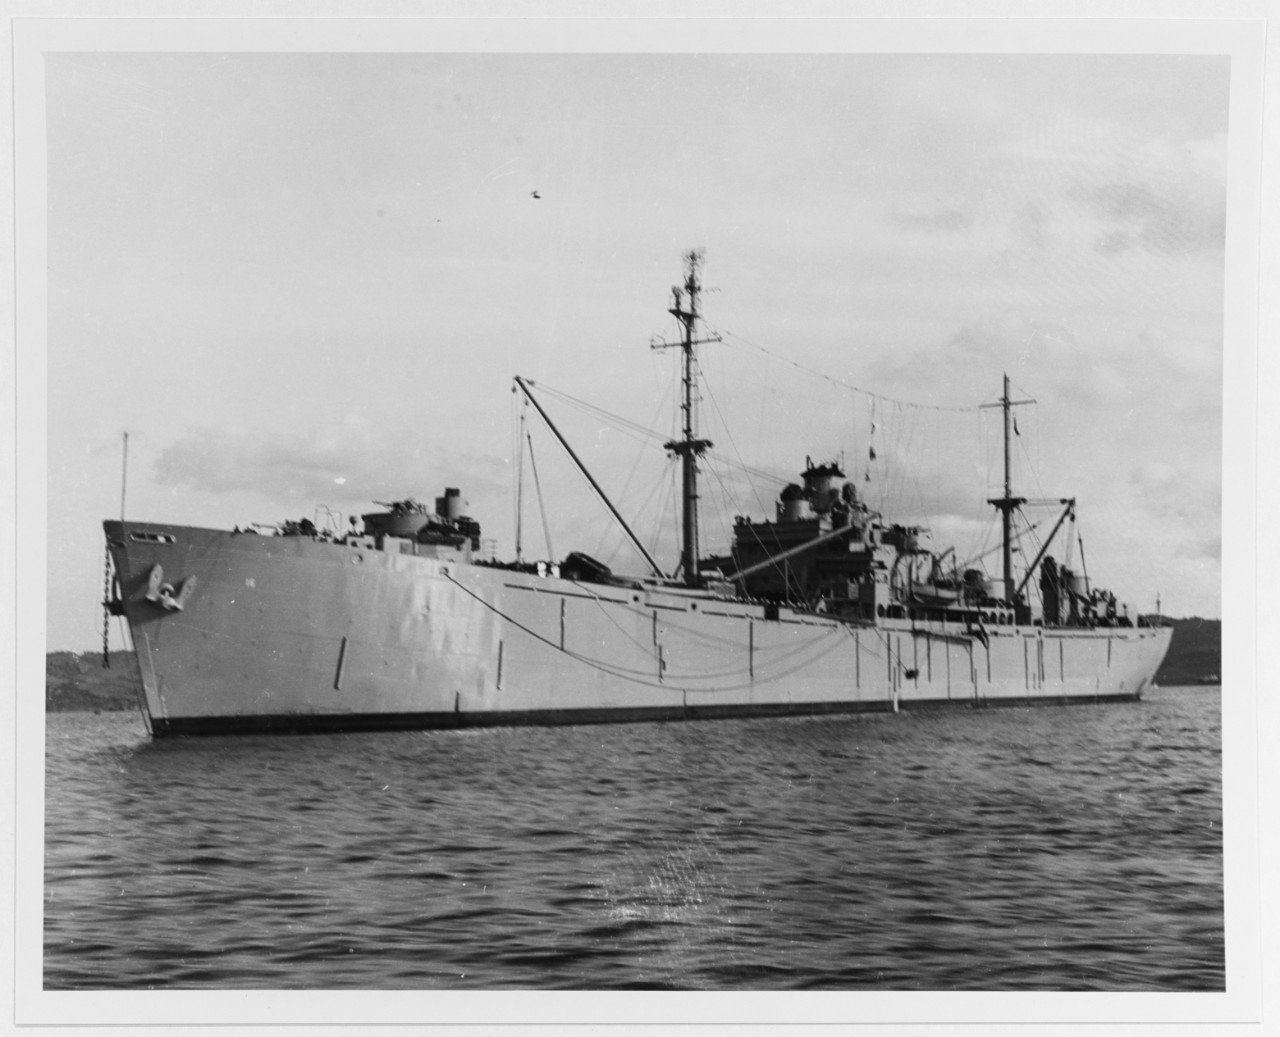 USS KERMIT ROOSEVELT (ARG-16)